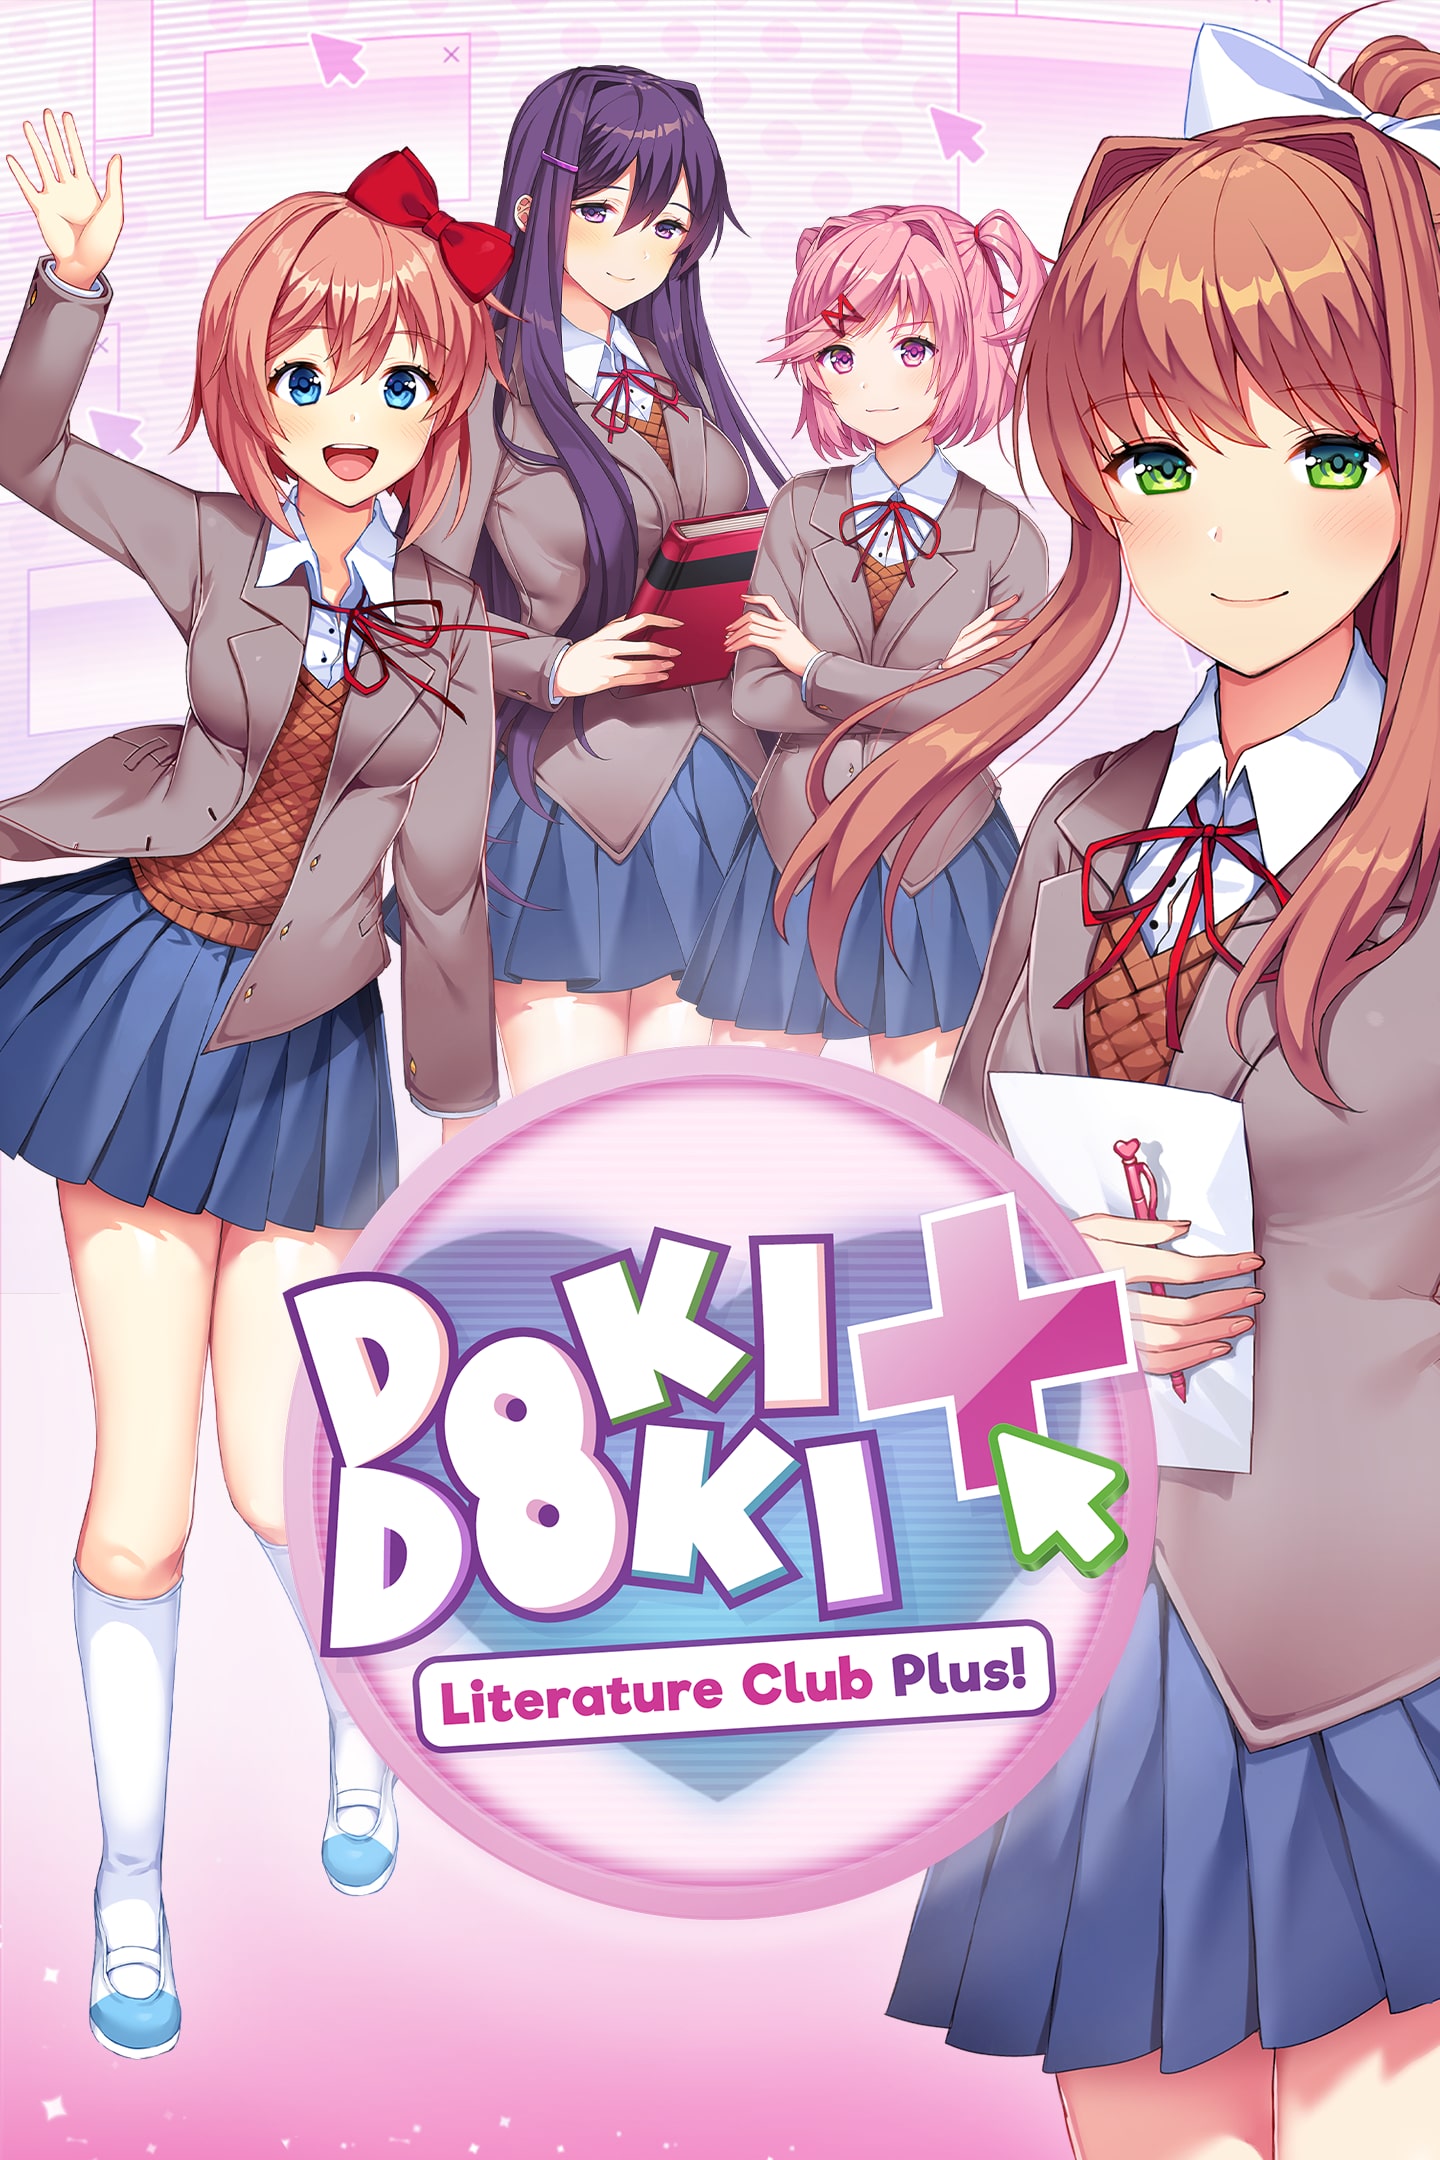 Doki Doki Literature Club Plus! Premium Edition - PS4, PlayStation 4